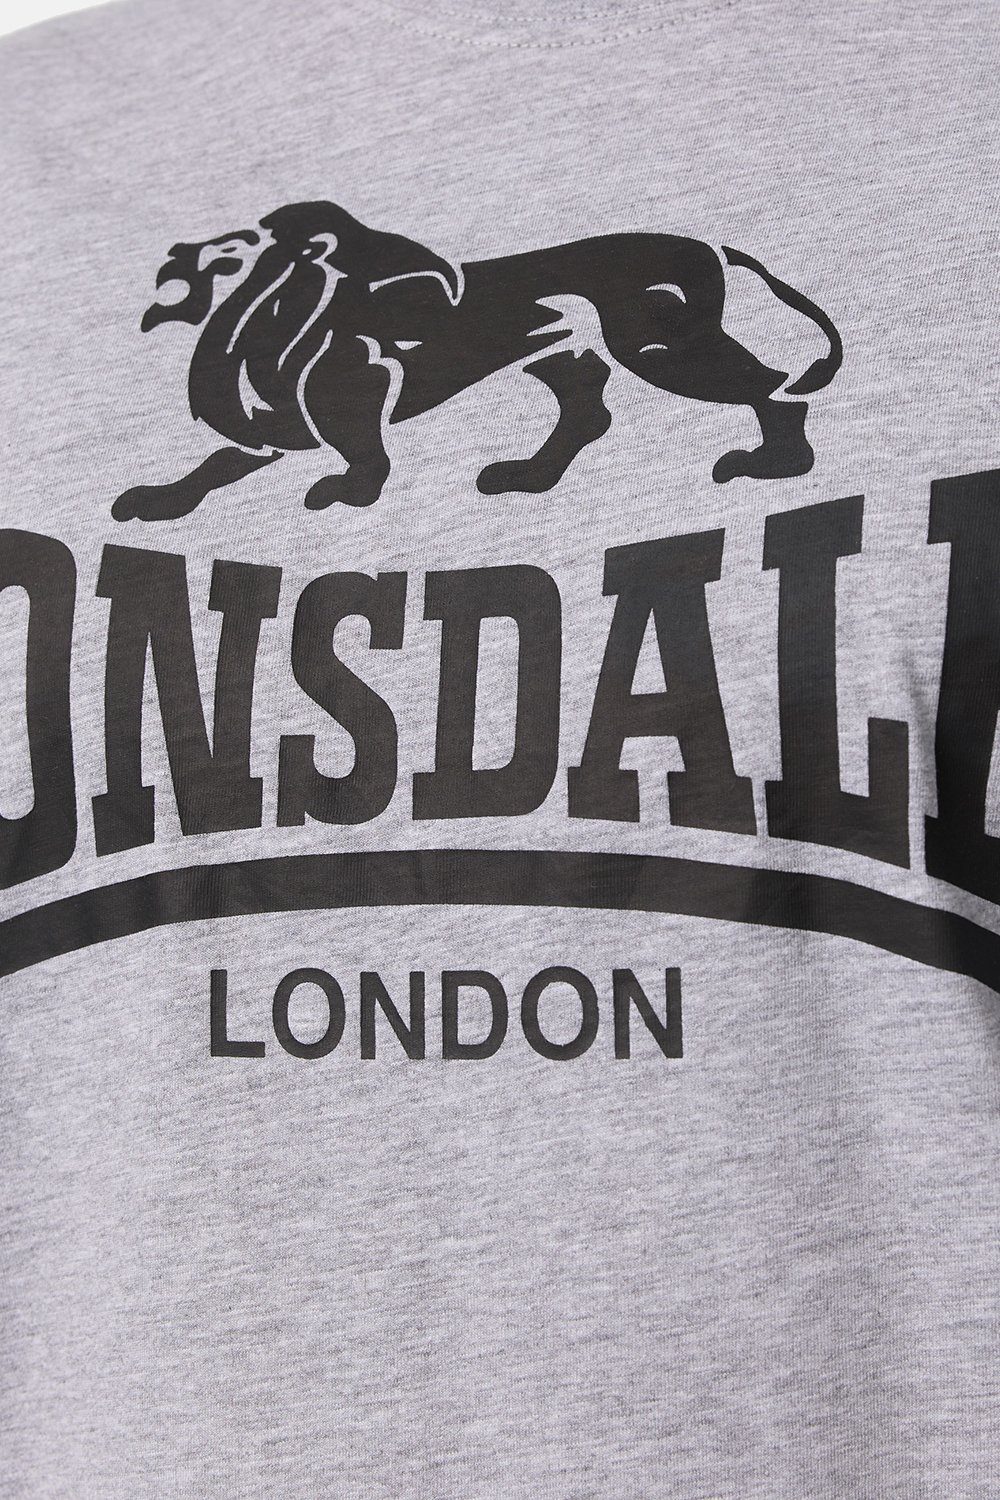 Lonsdale LOGO Marl Grey T-Shirt